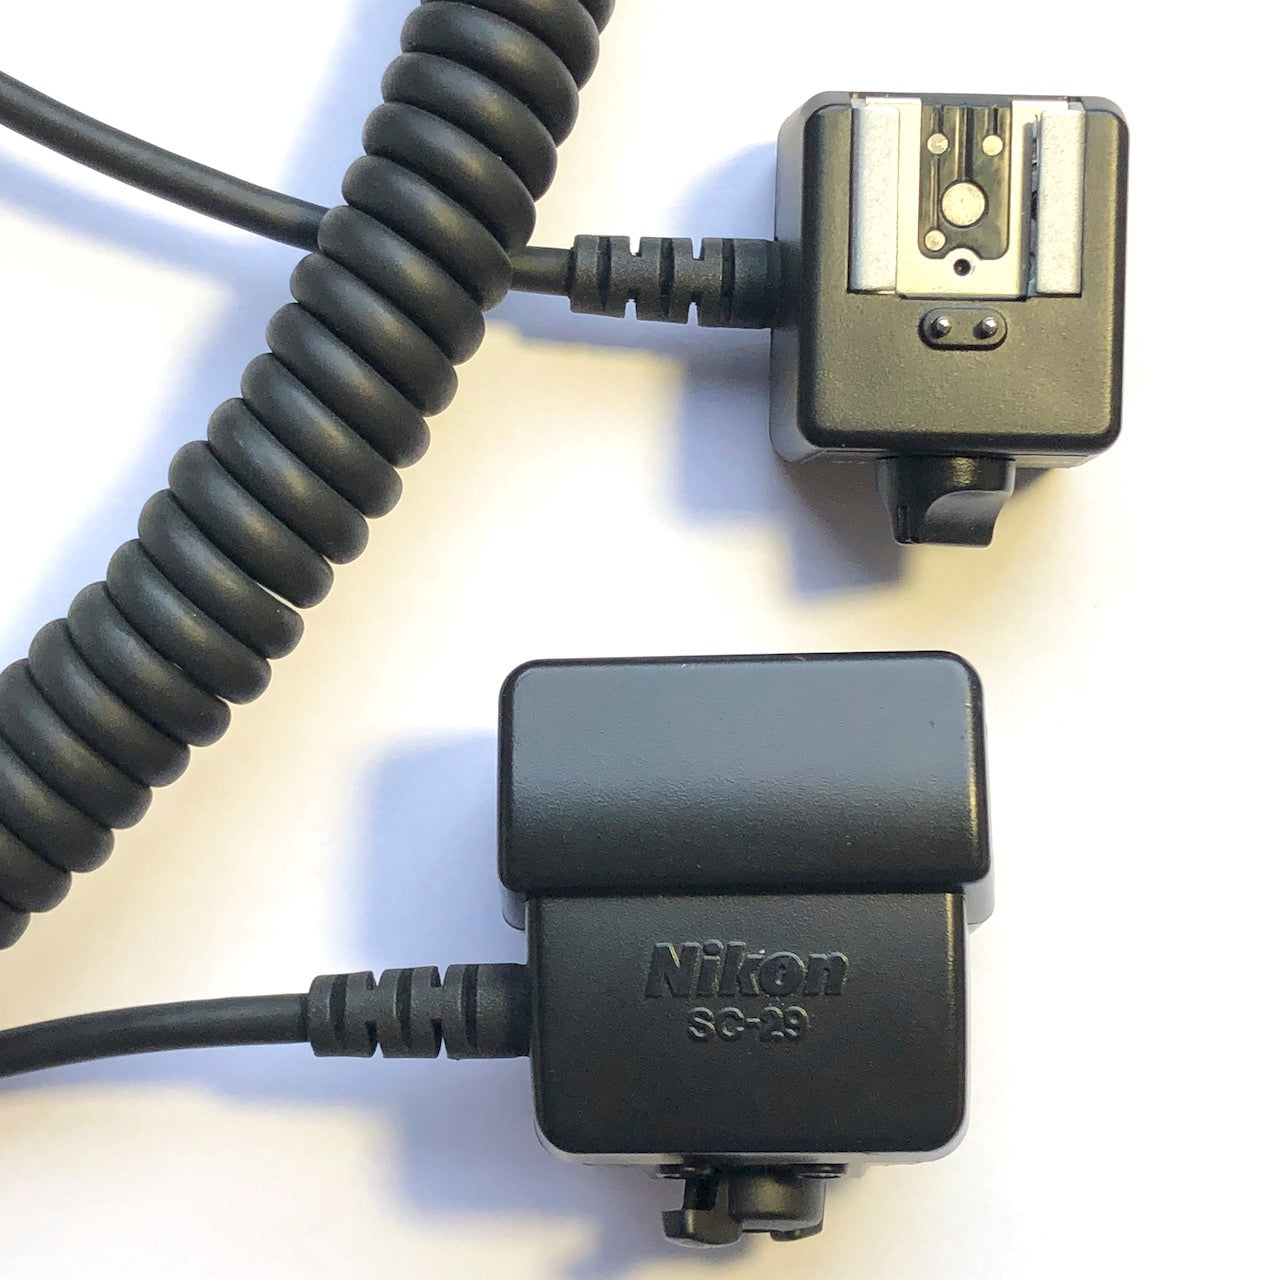 Nikon SC-29 remote TTL flash cable